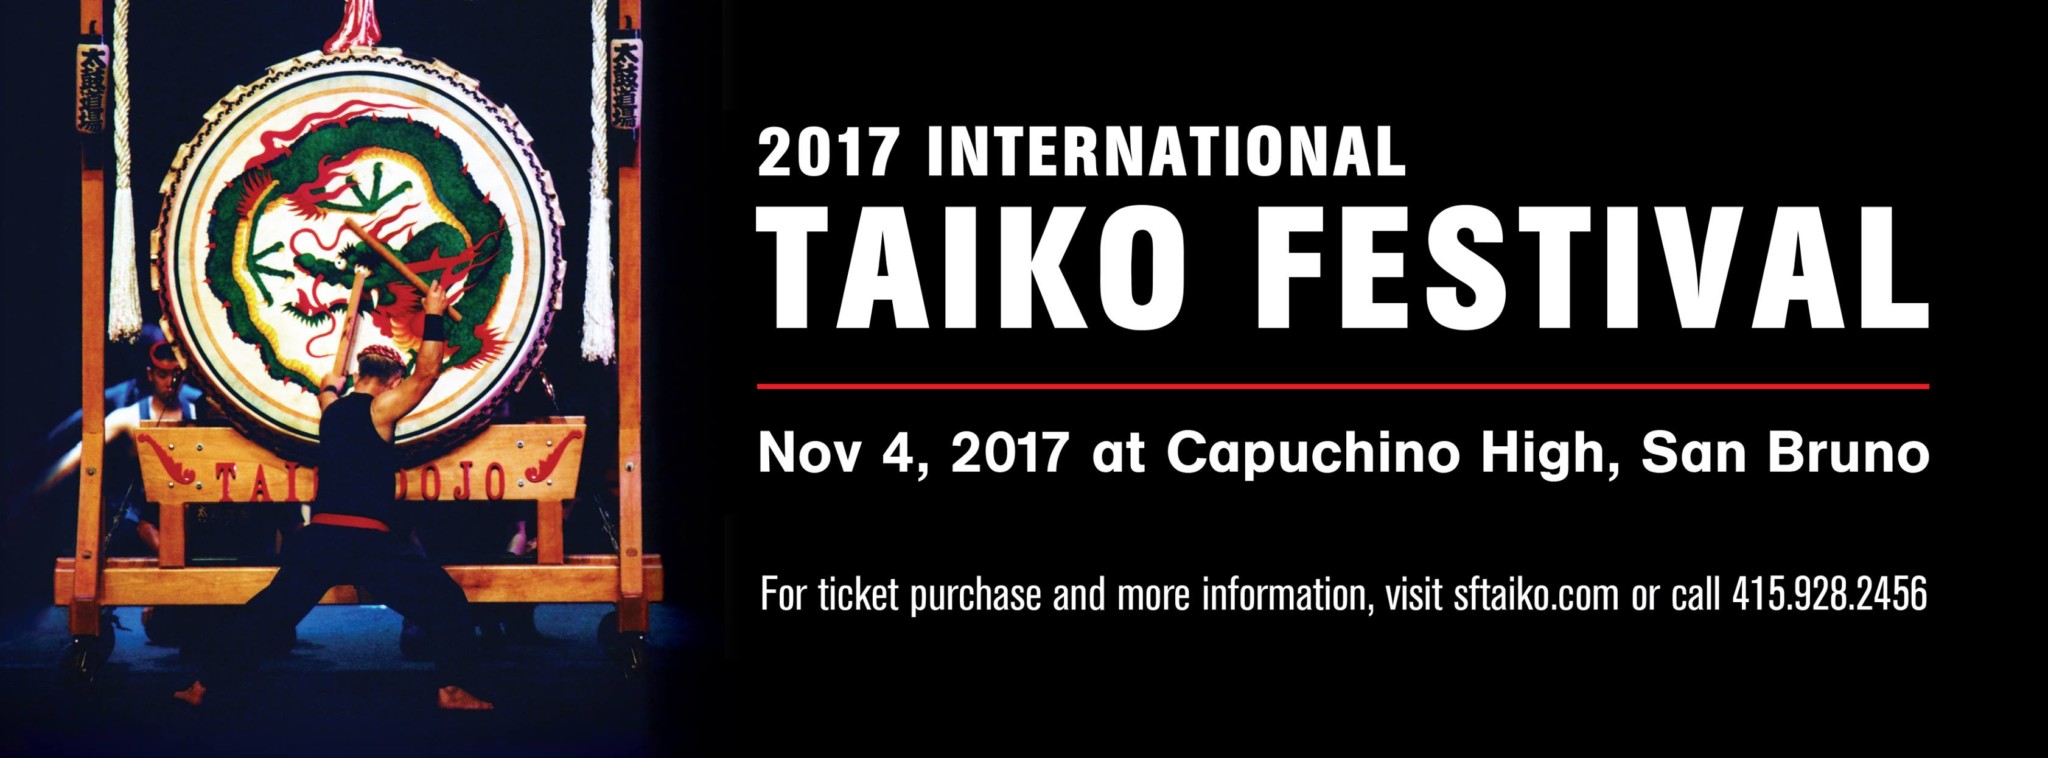 2017 International Taiko Festival